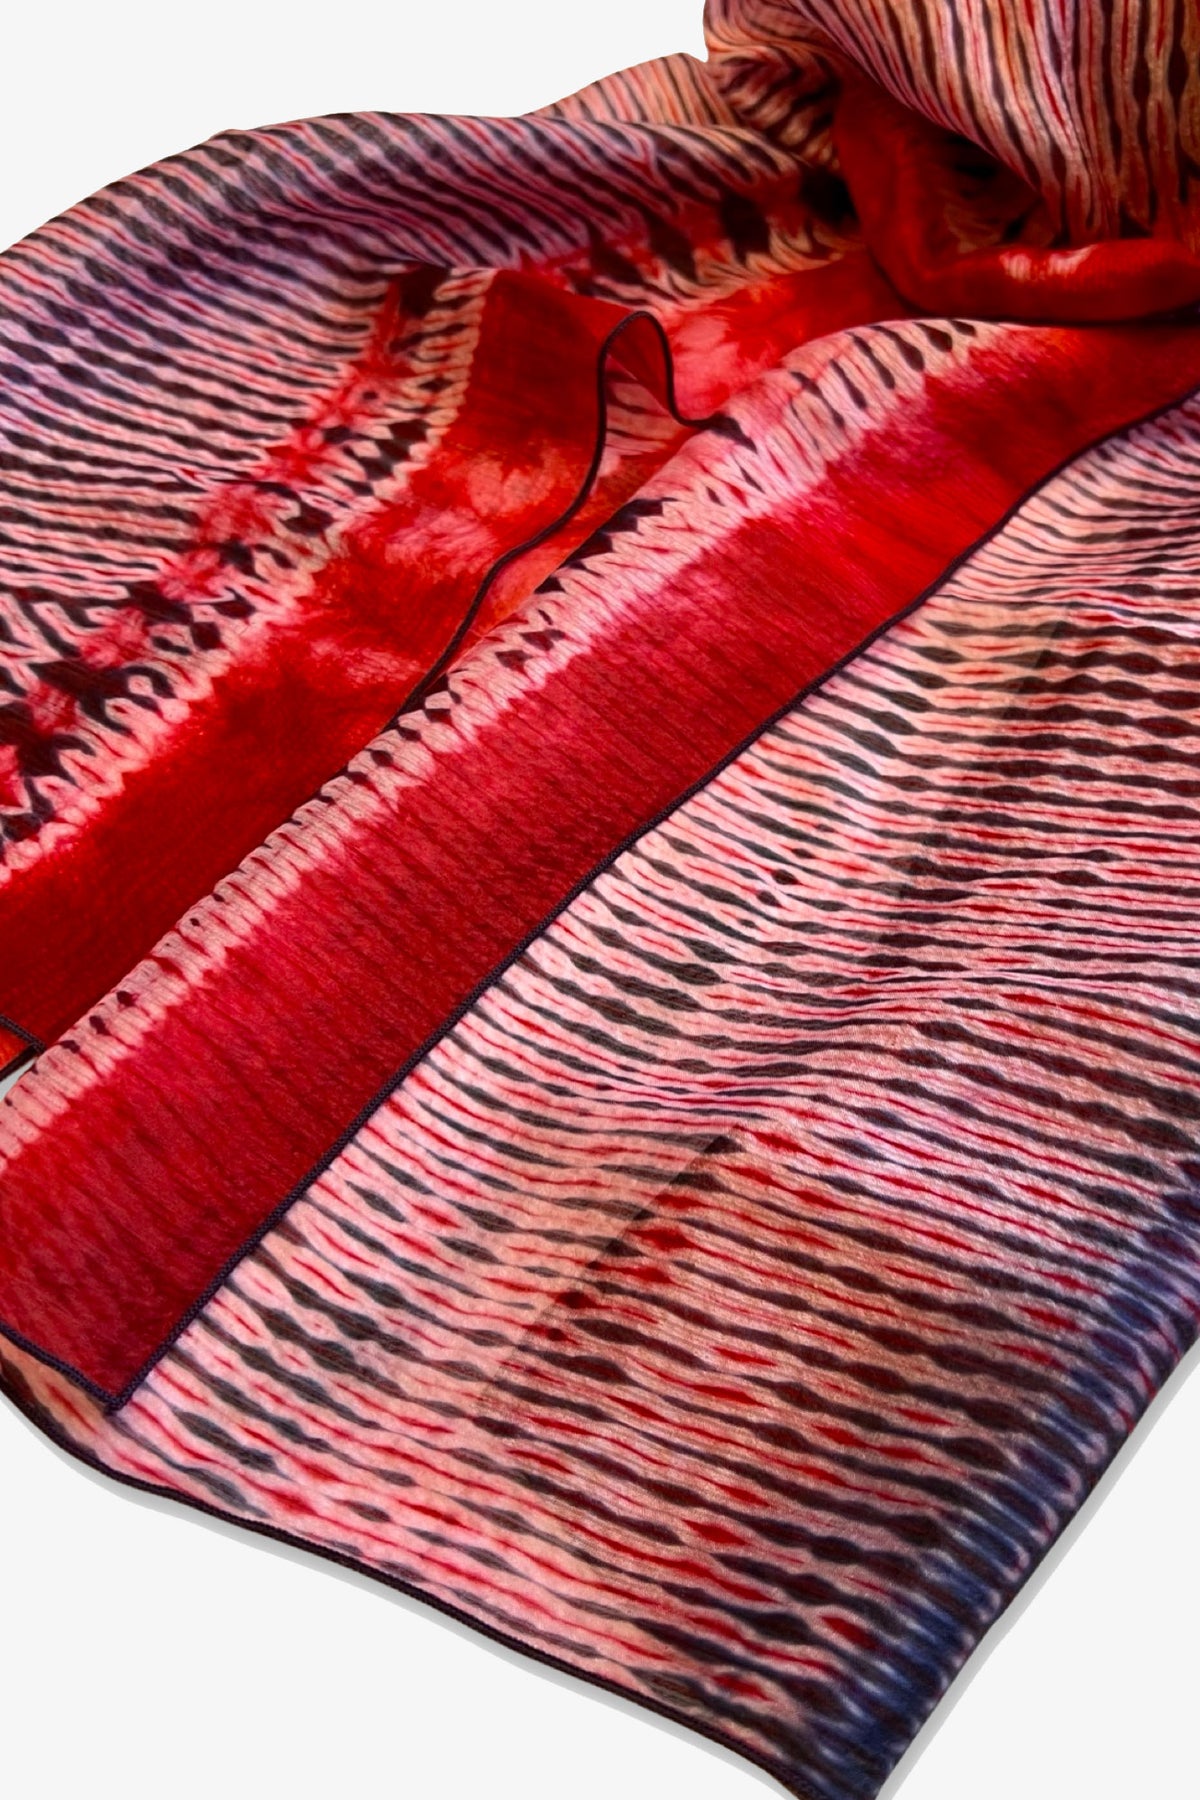 Shibori Dyed Silk Scarf | Raspberry Punch